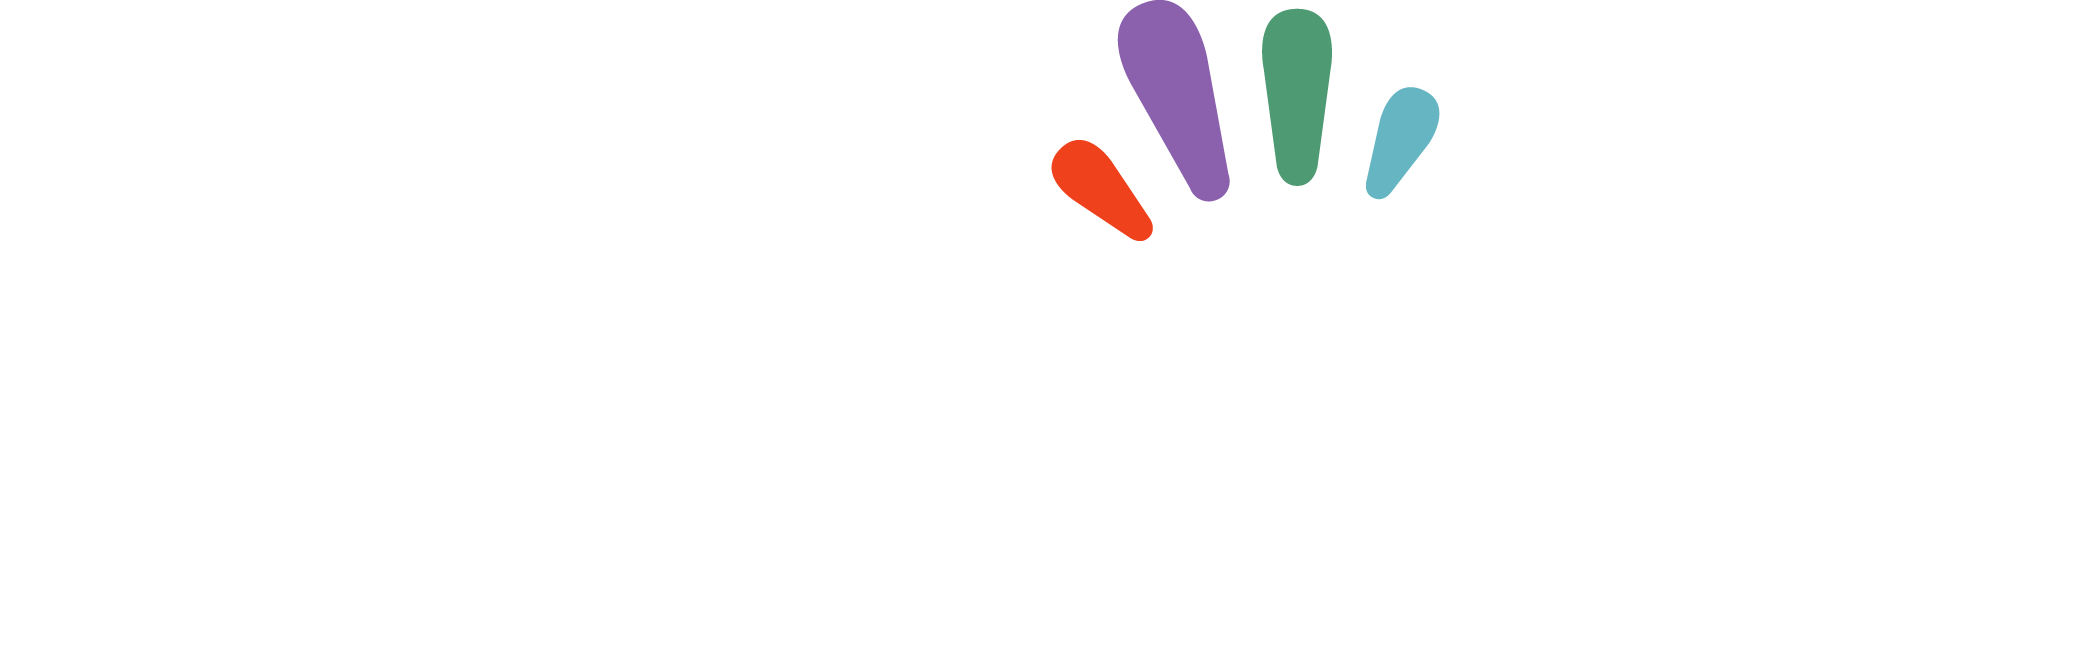 Hāpara logo (white version)